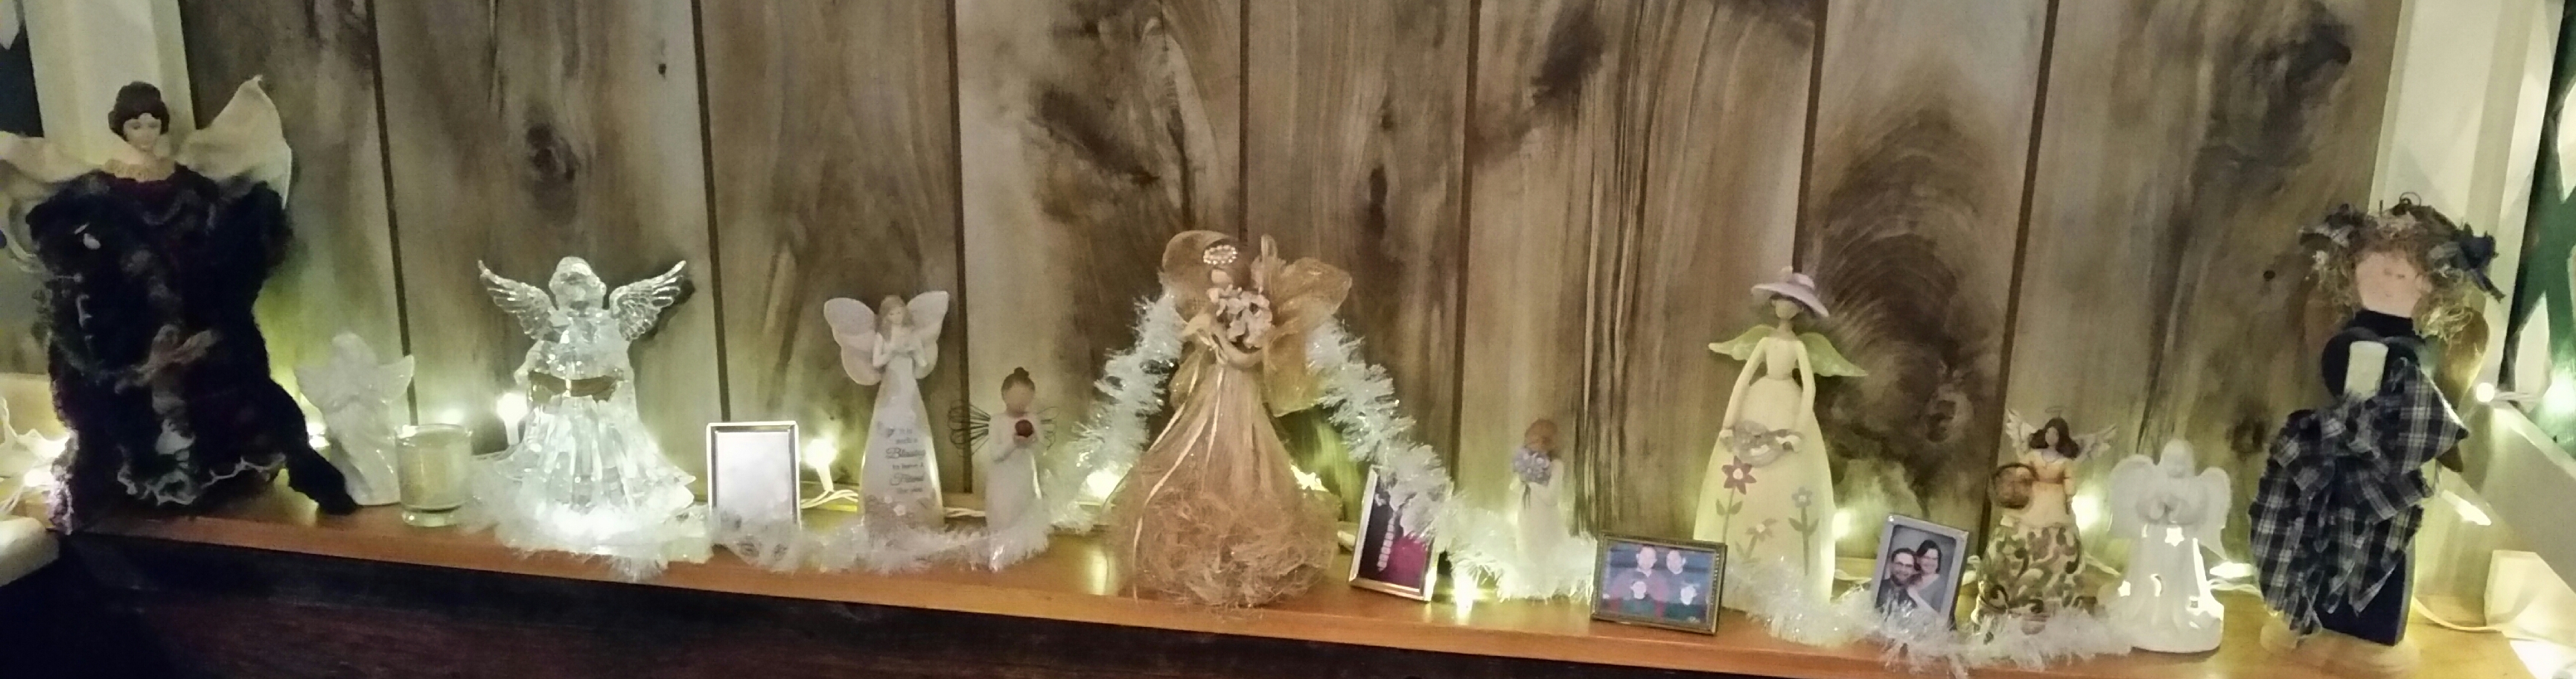 My angel shelf